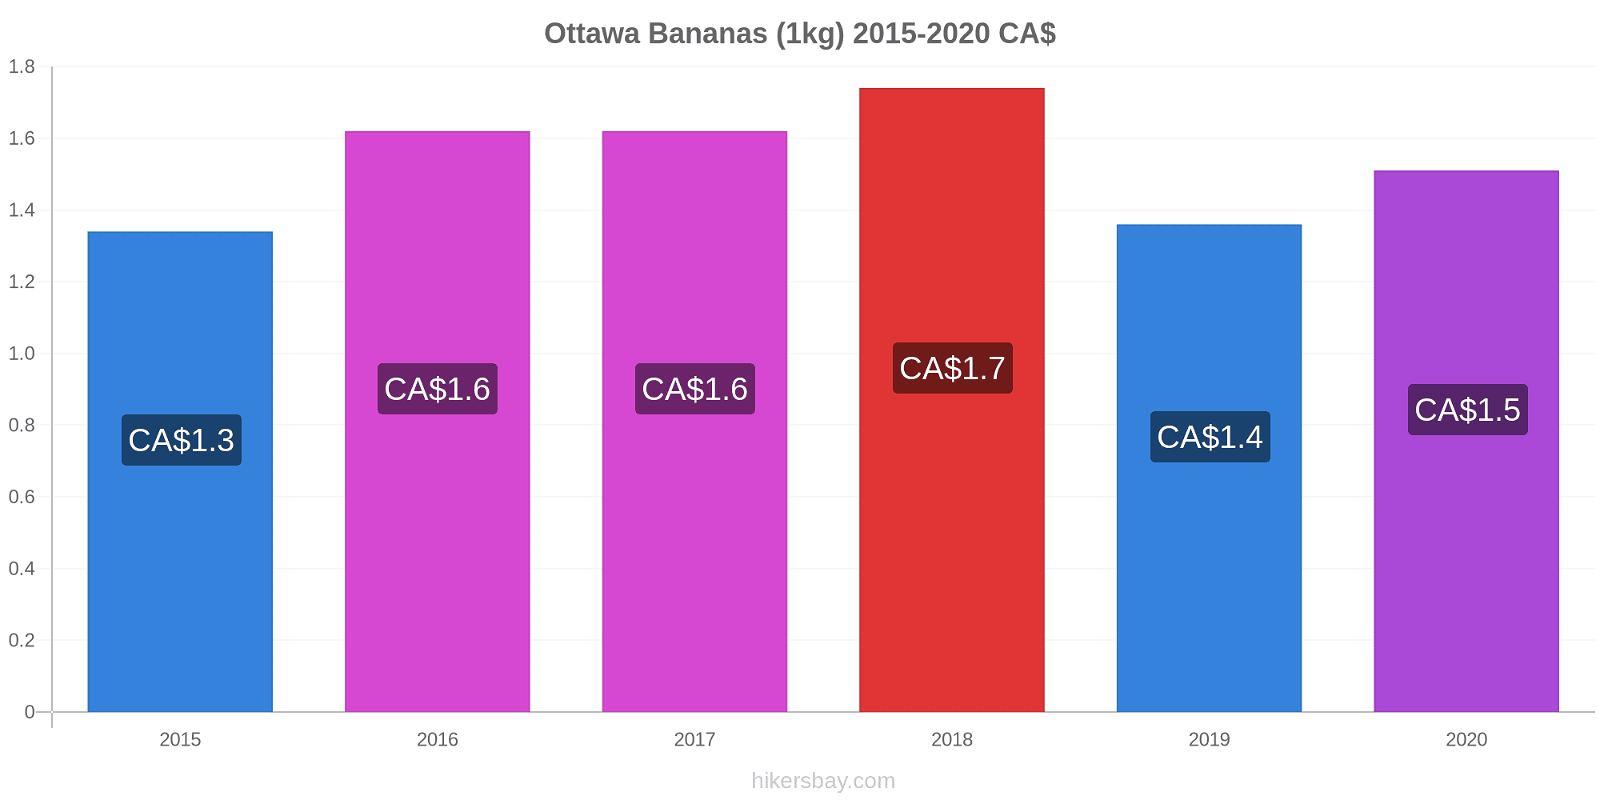 Ottawa price changes Bananas (1kg) hikersbay.com